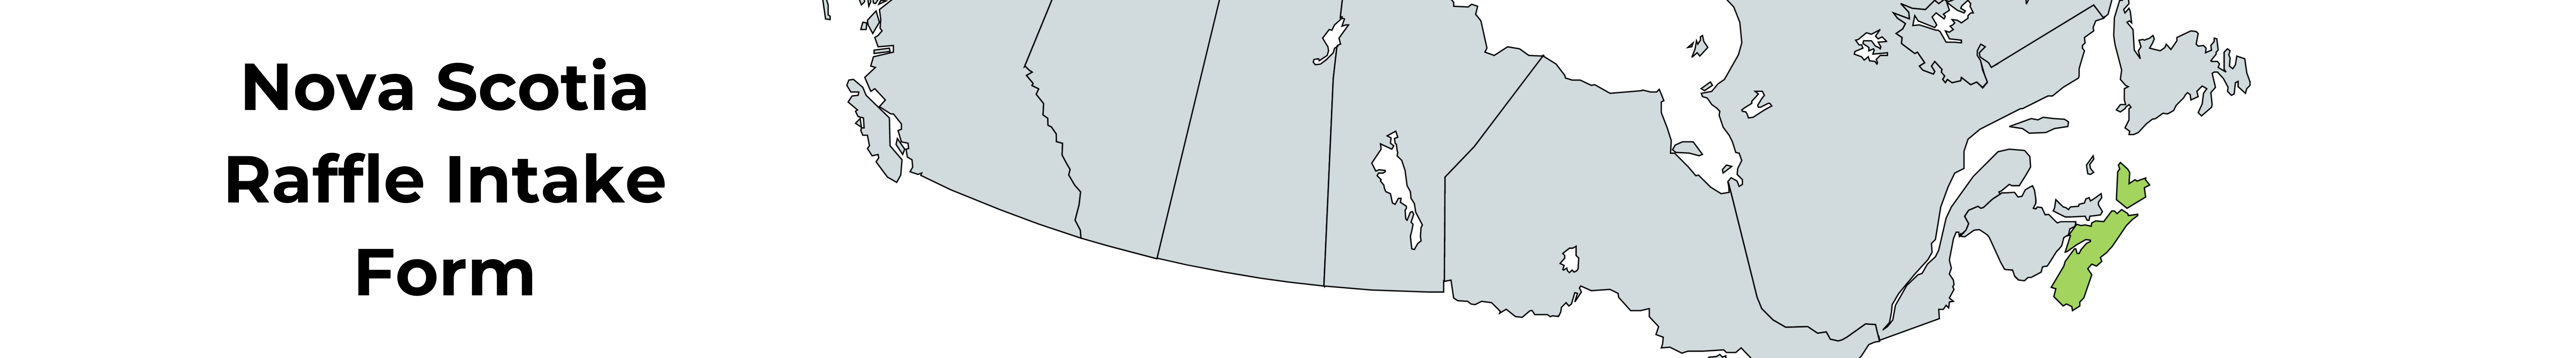 Nova Scotia Raffle Intake Form